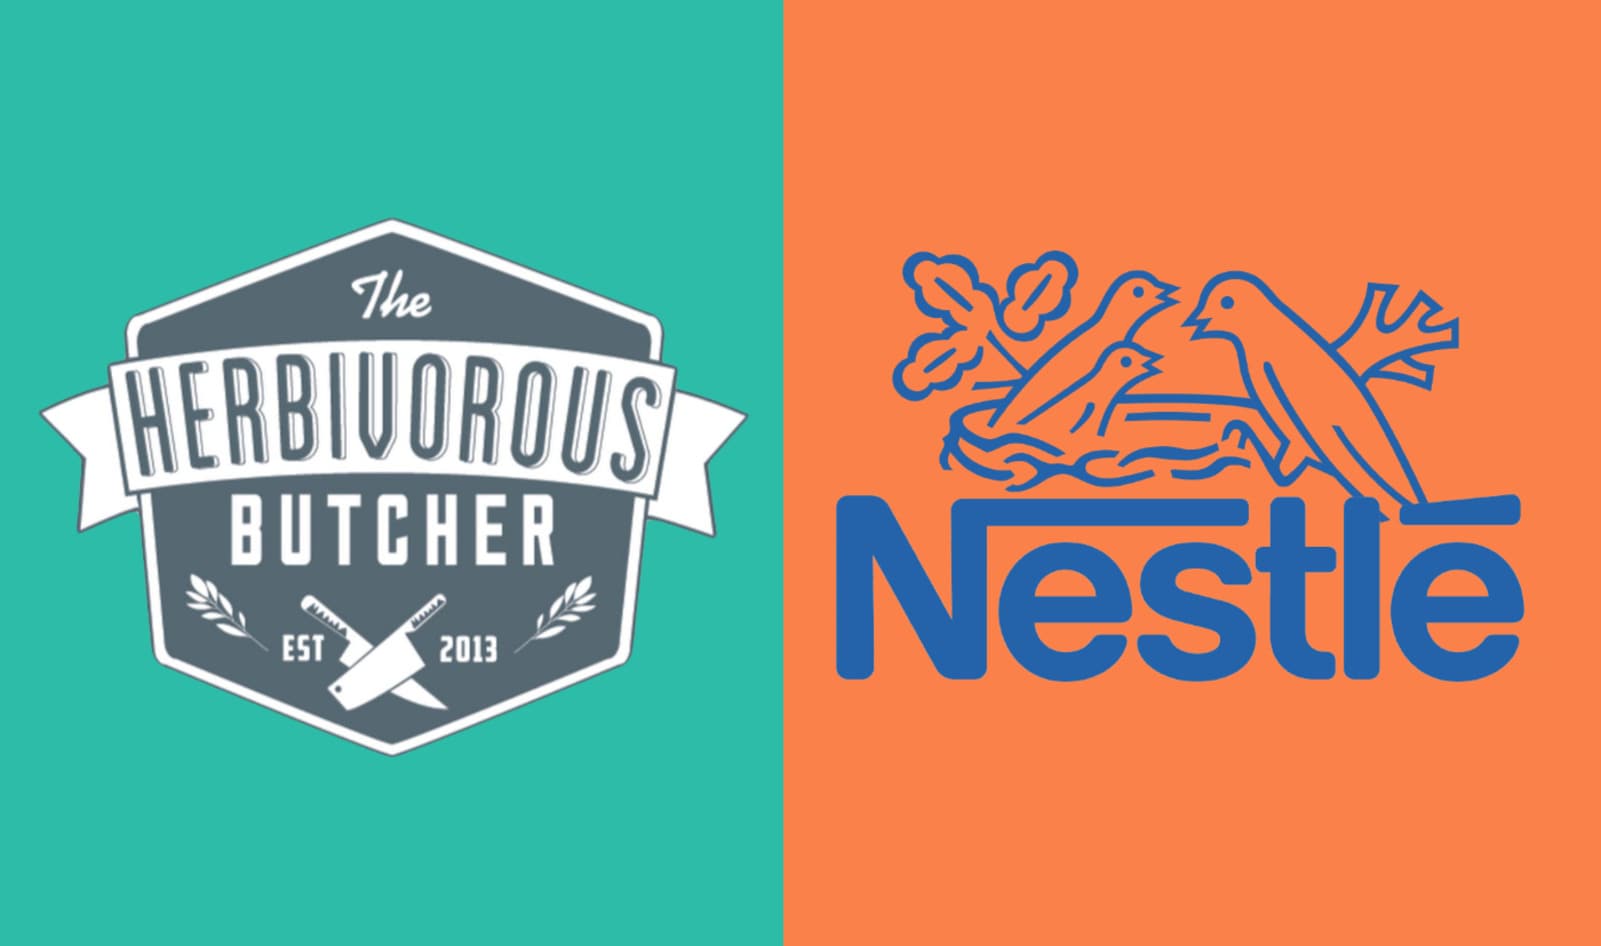 The Herbivorous Butcher Enters Into “Vegan Butcher” Trademark Dispute with Nestlé